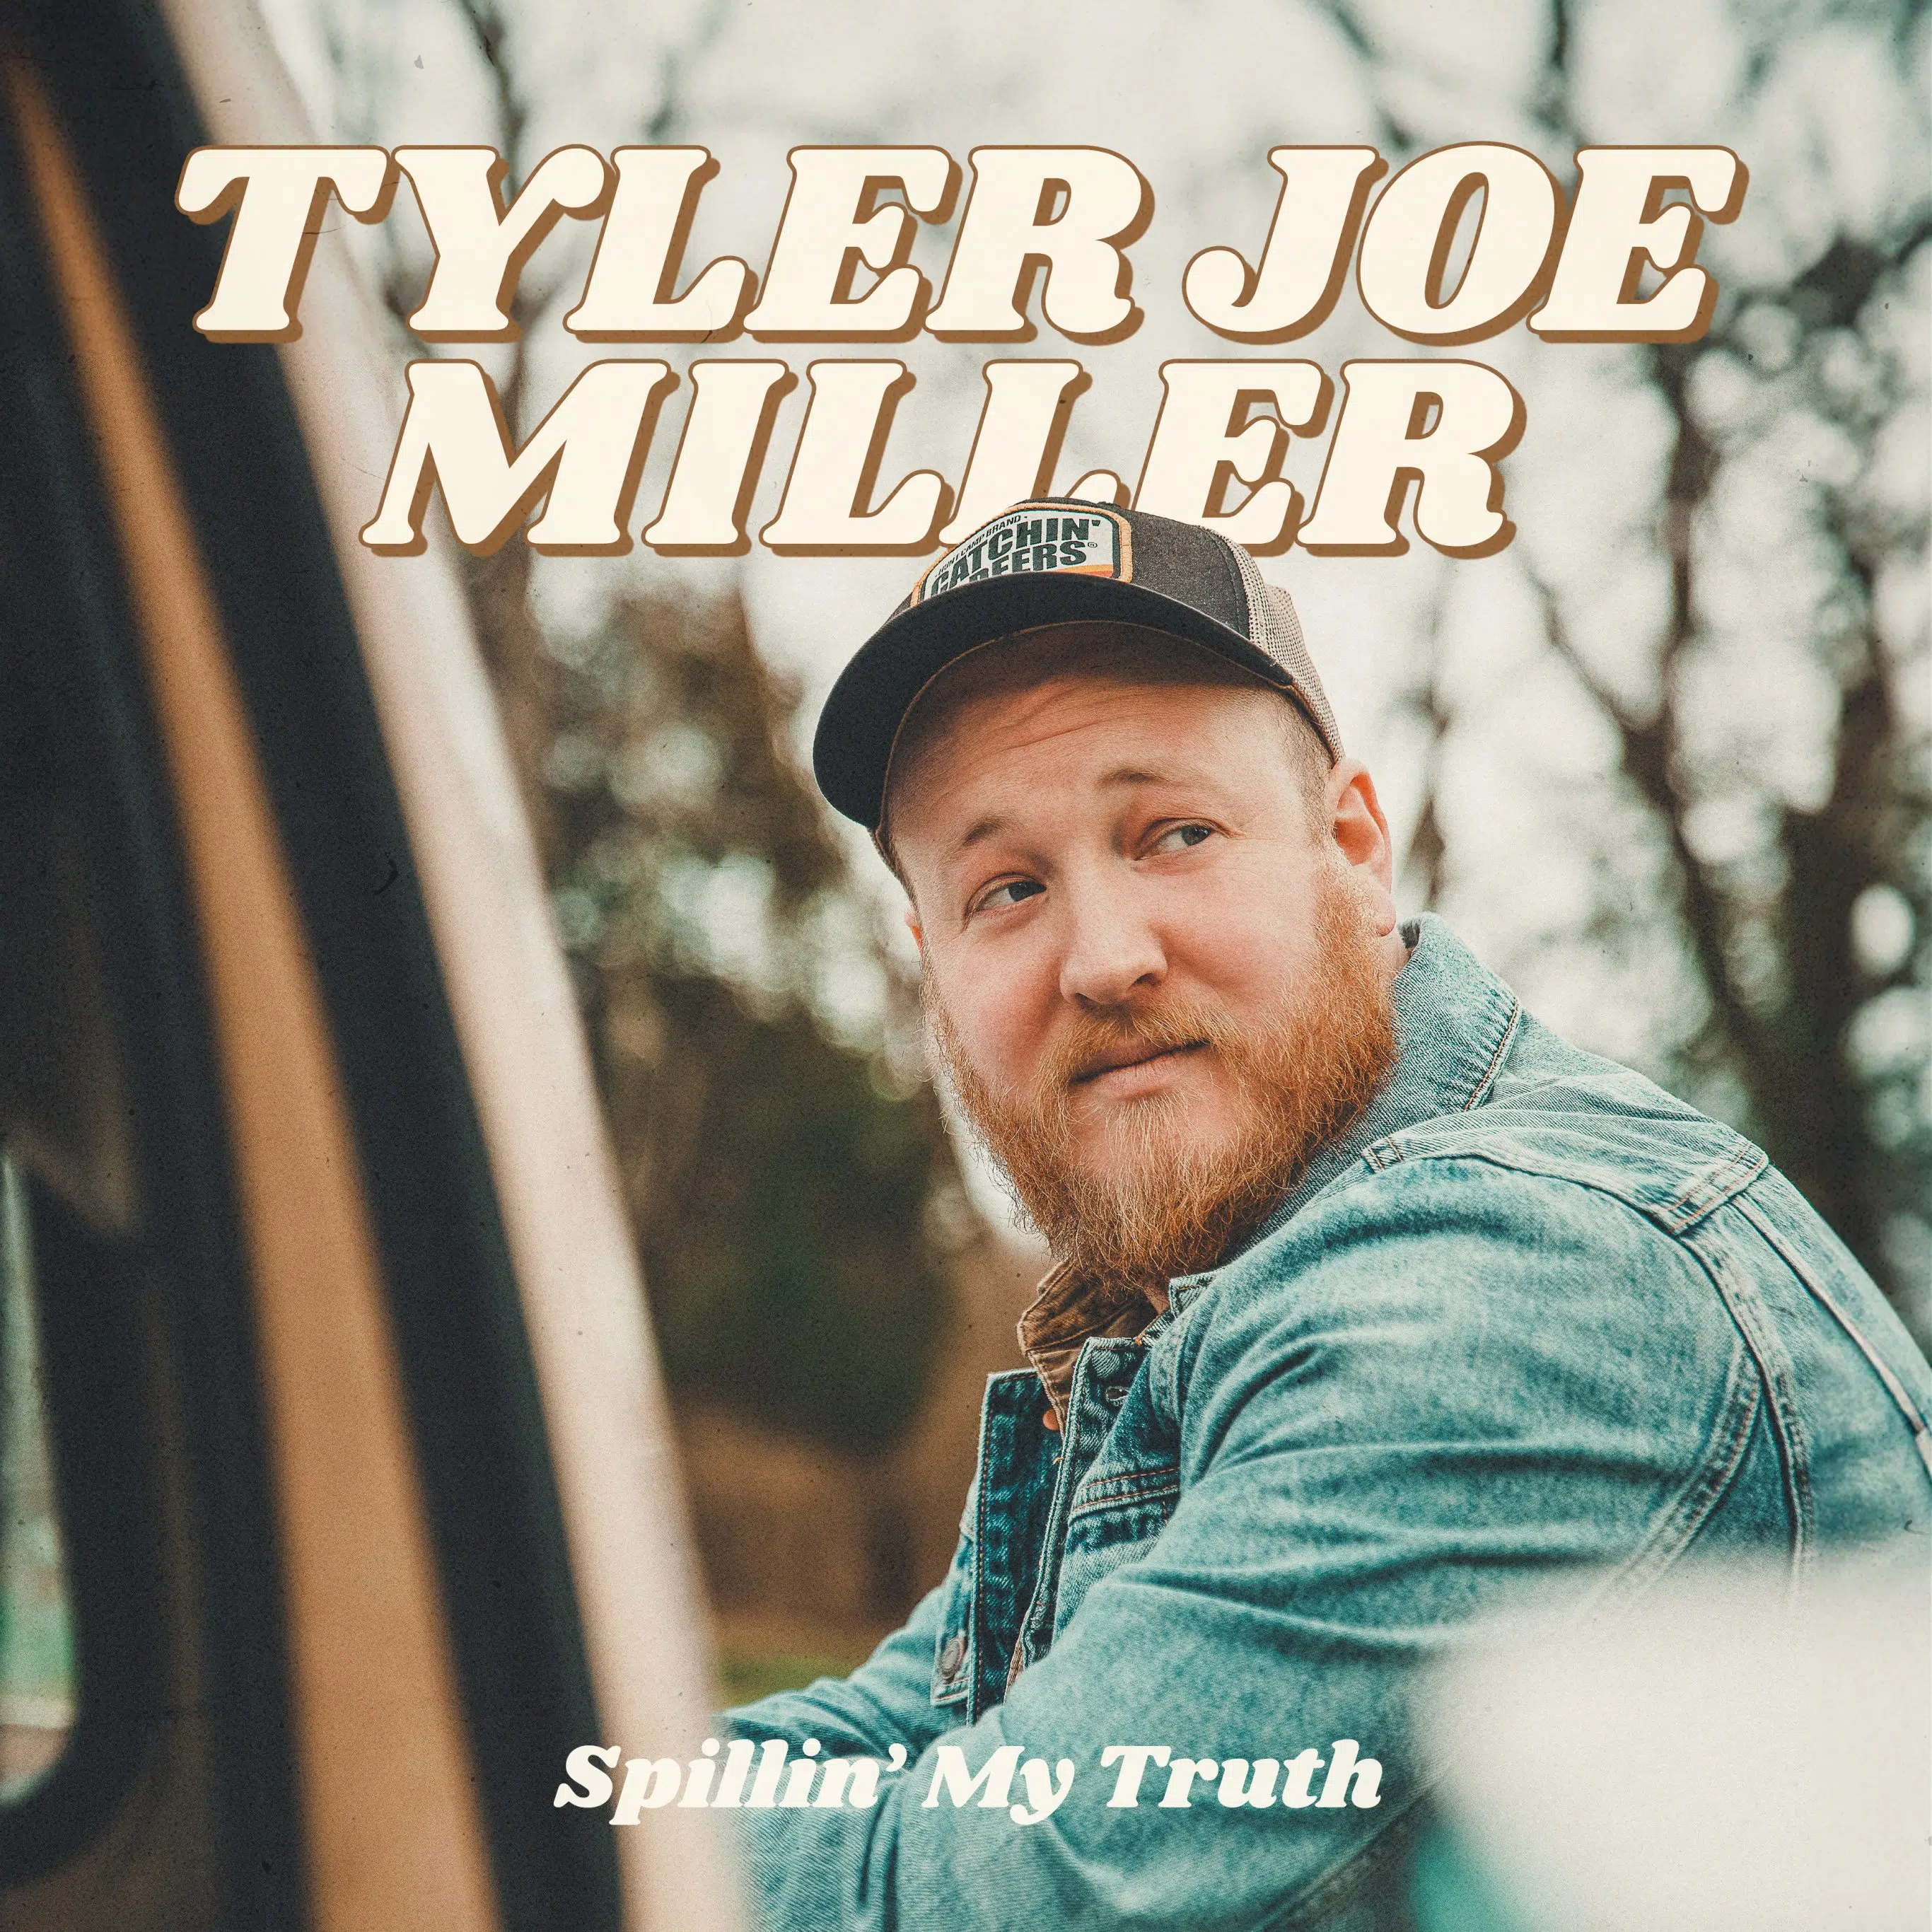 Spillin' Tyler Joe Miller's Truth - ON DEMAND!